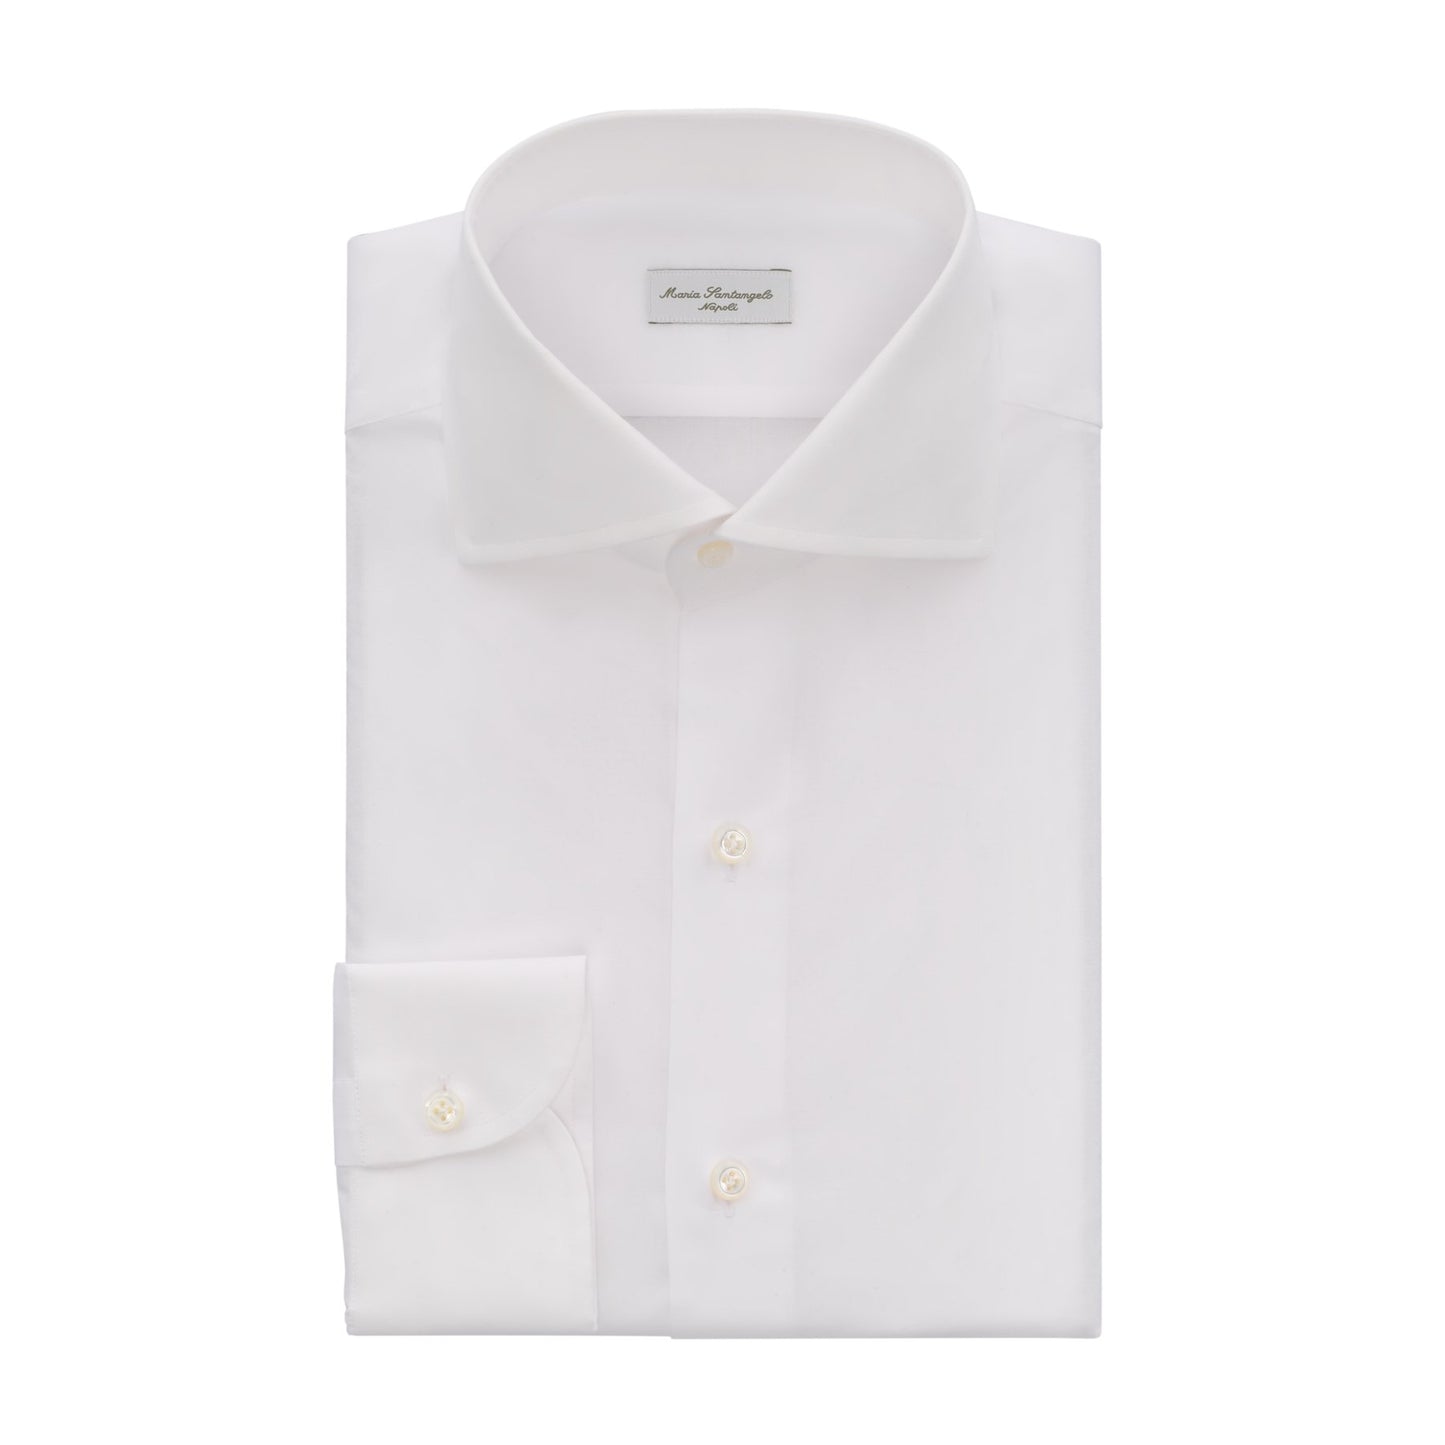 Maria Santangelo Cotton Shirt in Off White - SARTALE